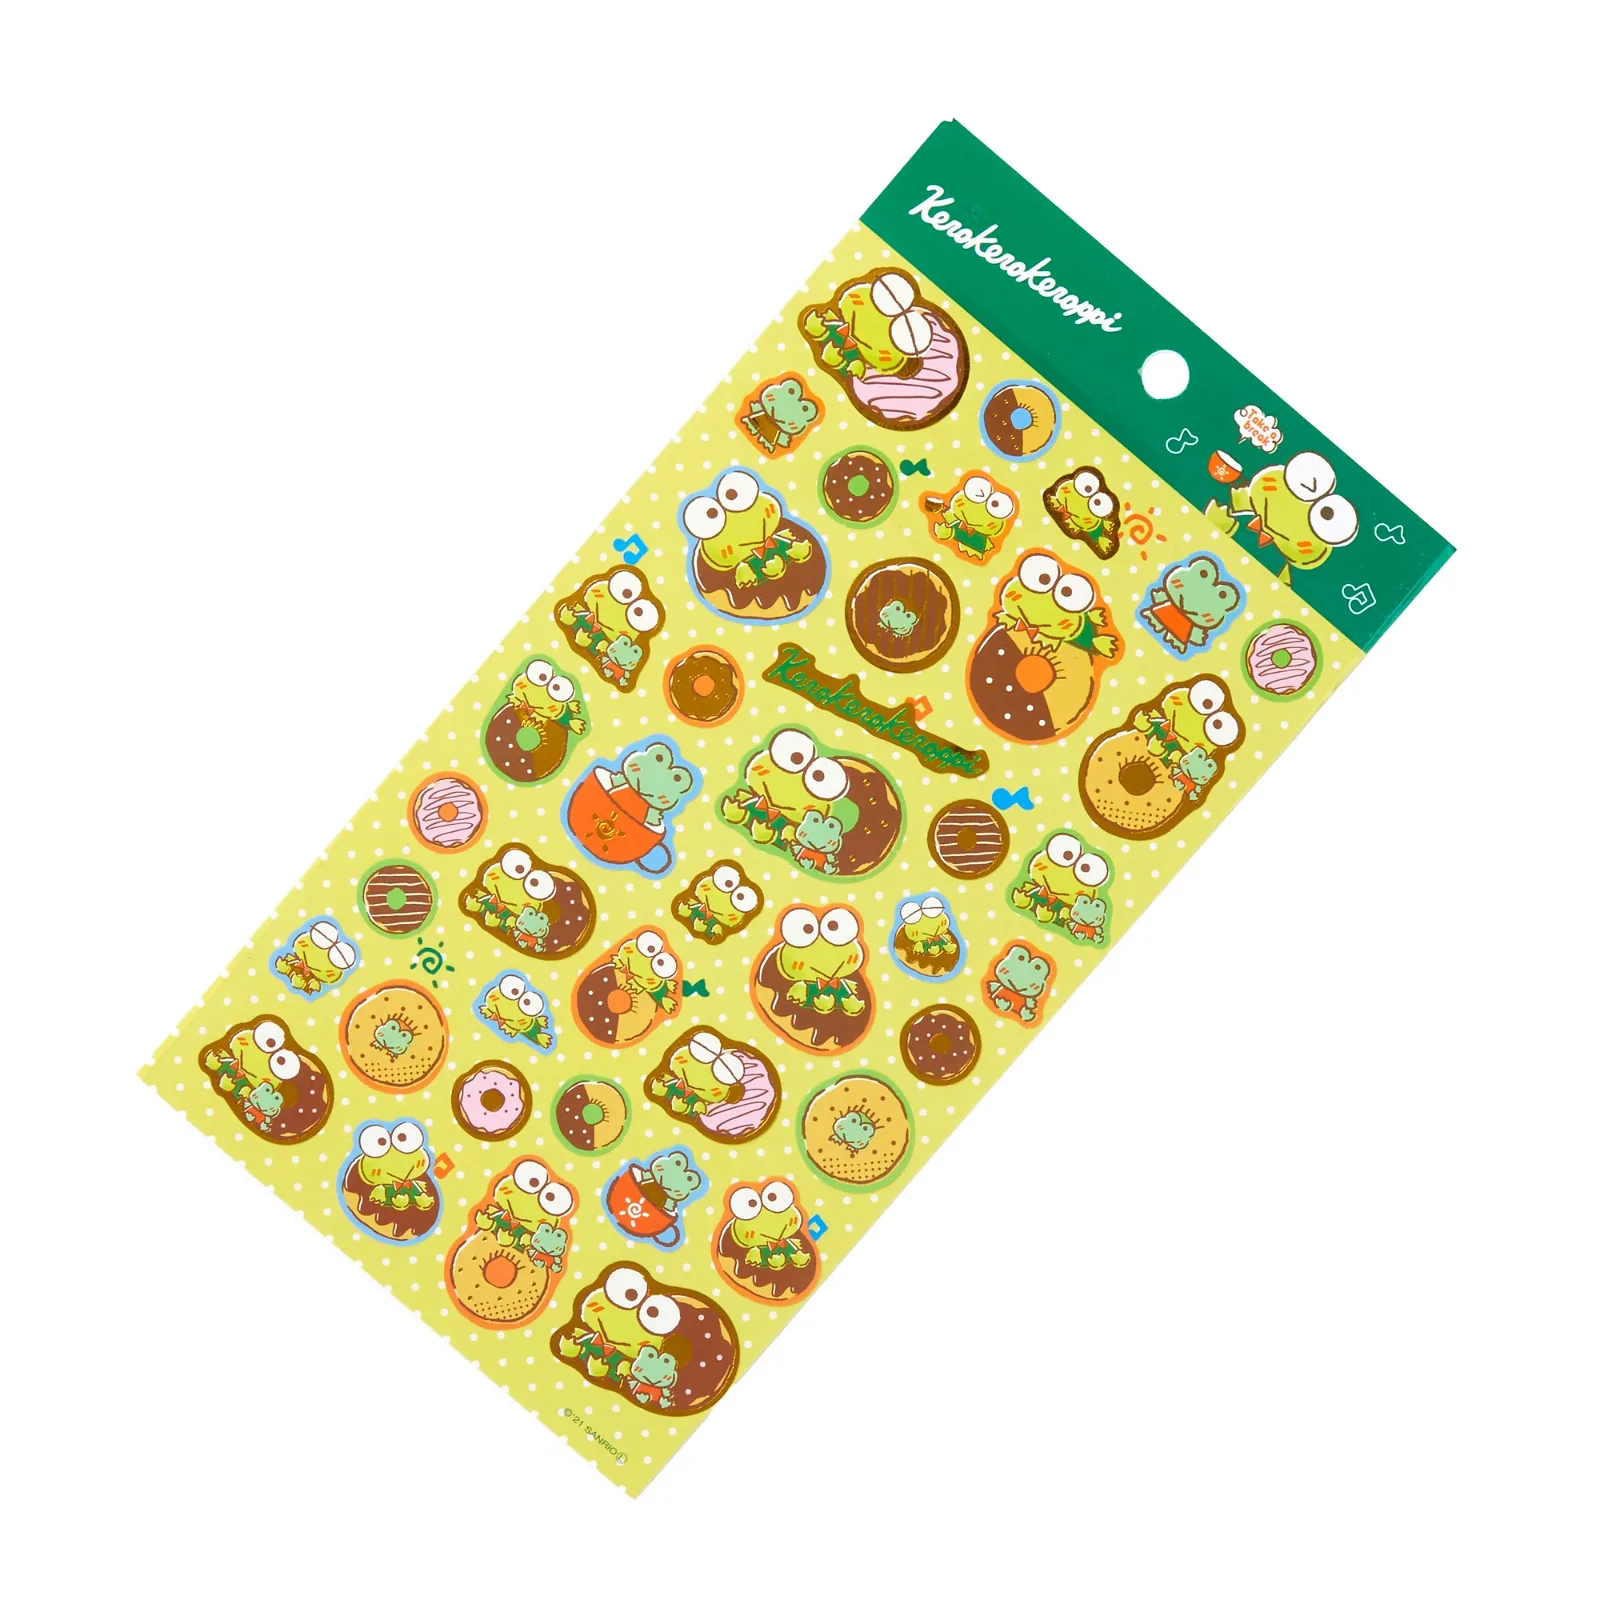 Image of Keroppi Gold Accent Sticker Sheet